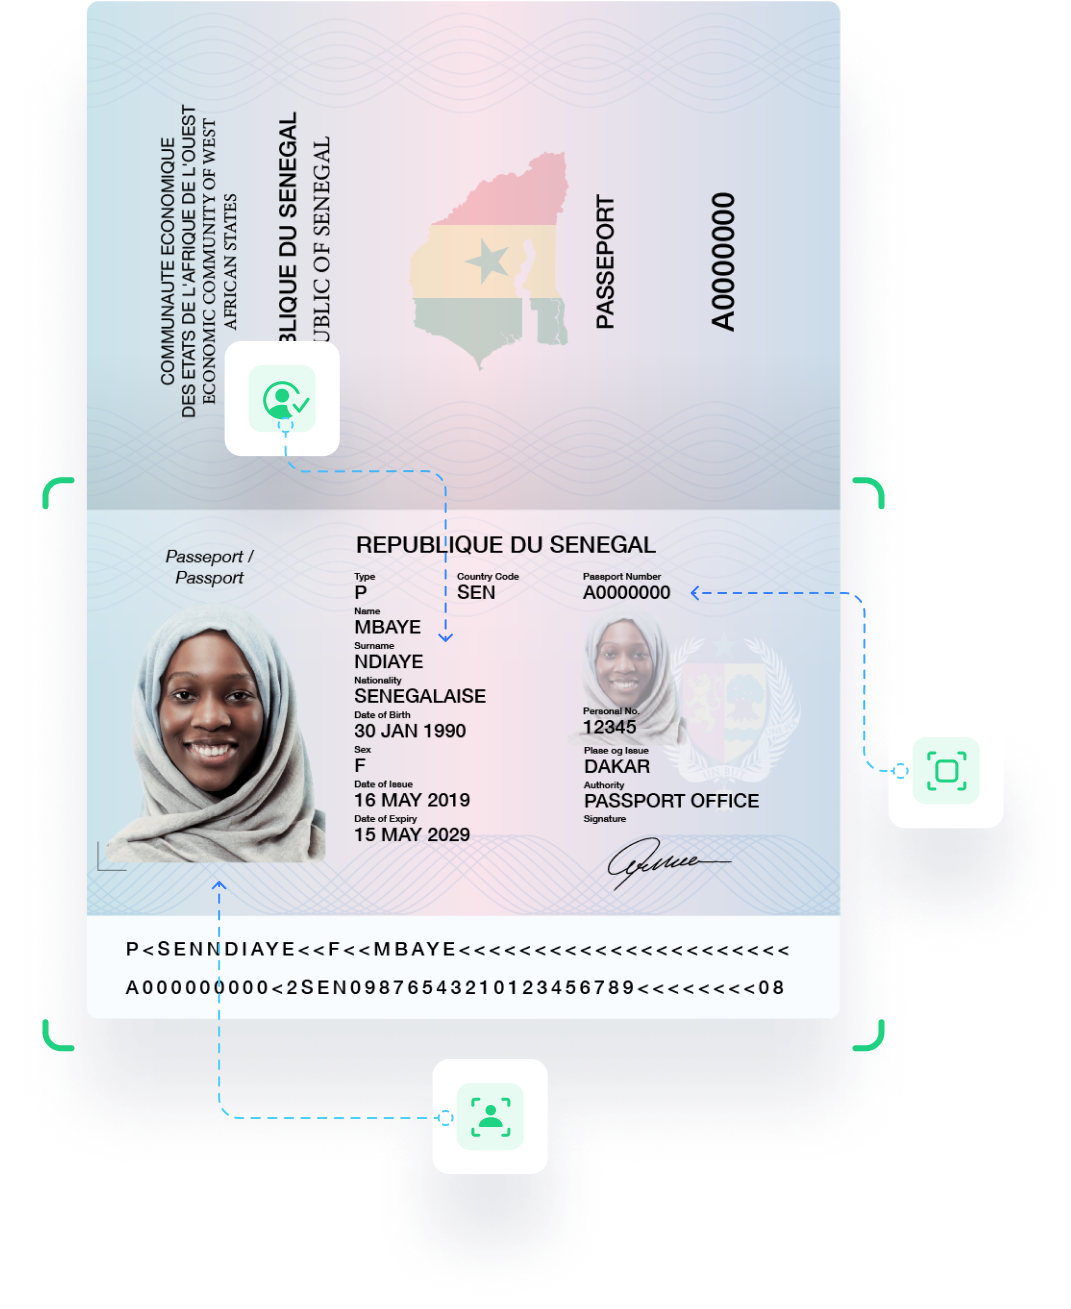 Passport digital identity verification service provider in Senegal